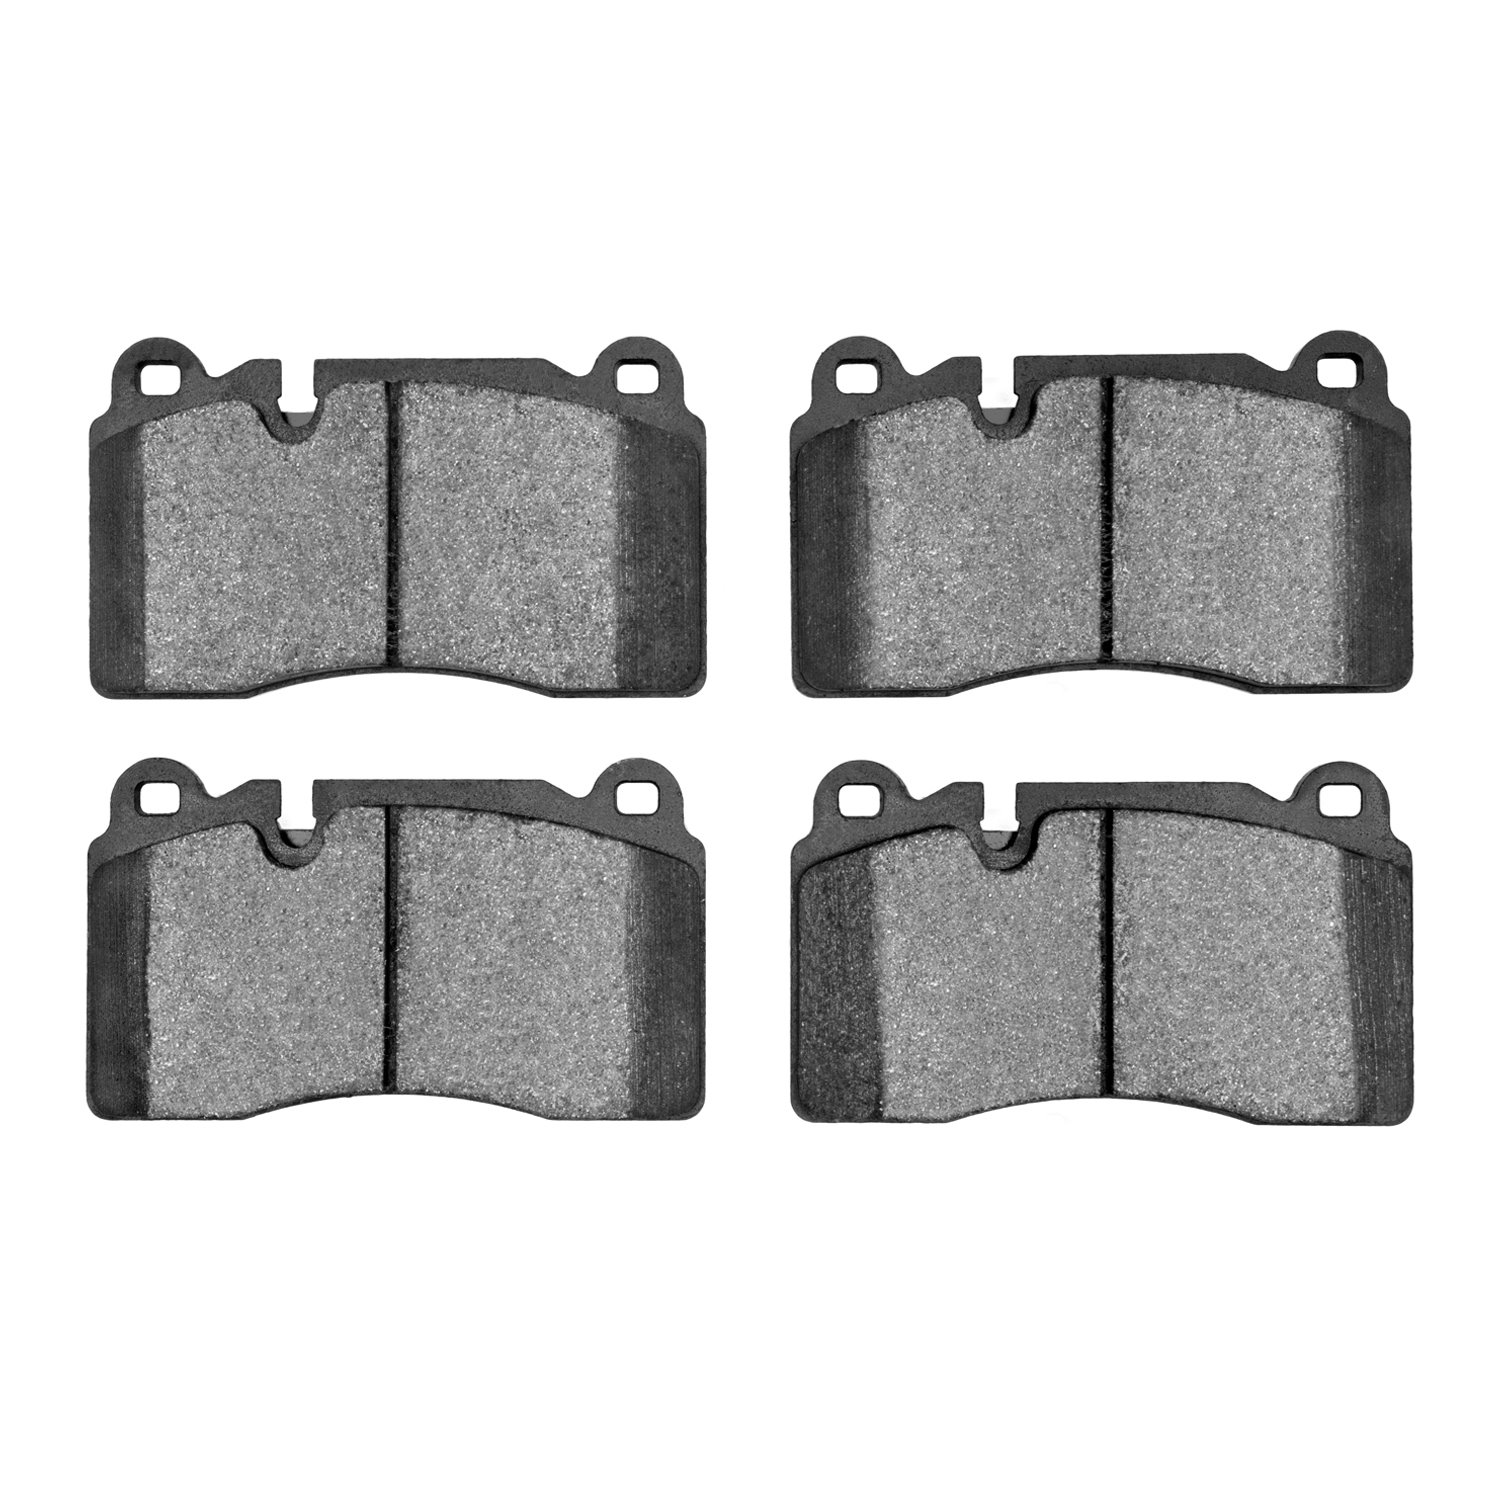 1000-1849-00 Track/Street Low-Metallic Brake Pads Kit, Fits Select Multiple Makes/Models, Position: Rear